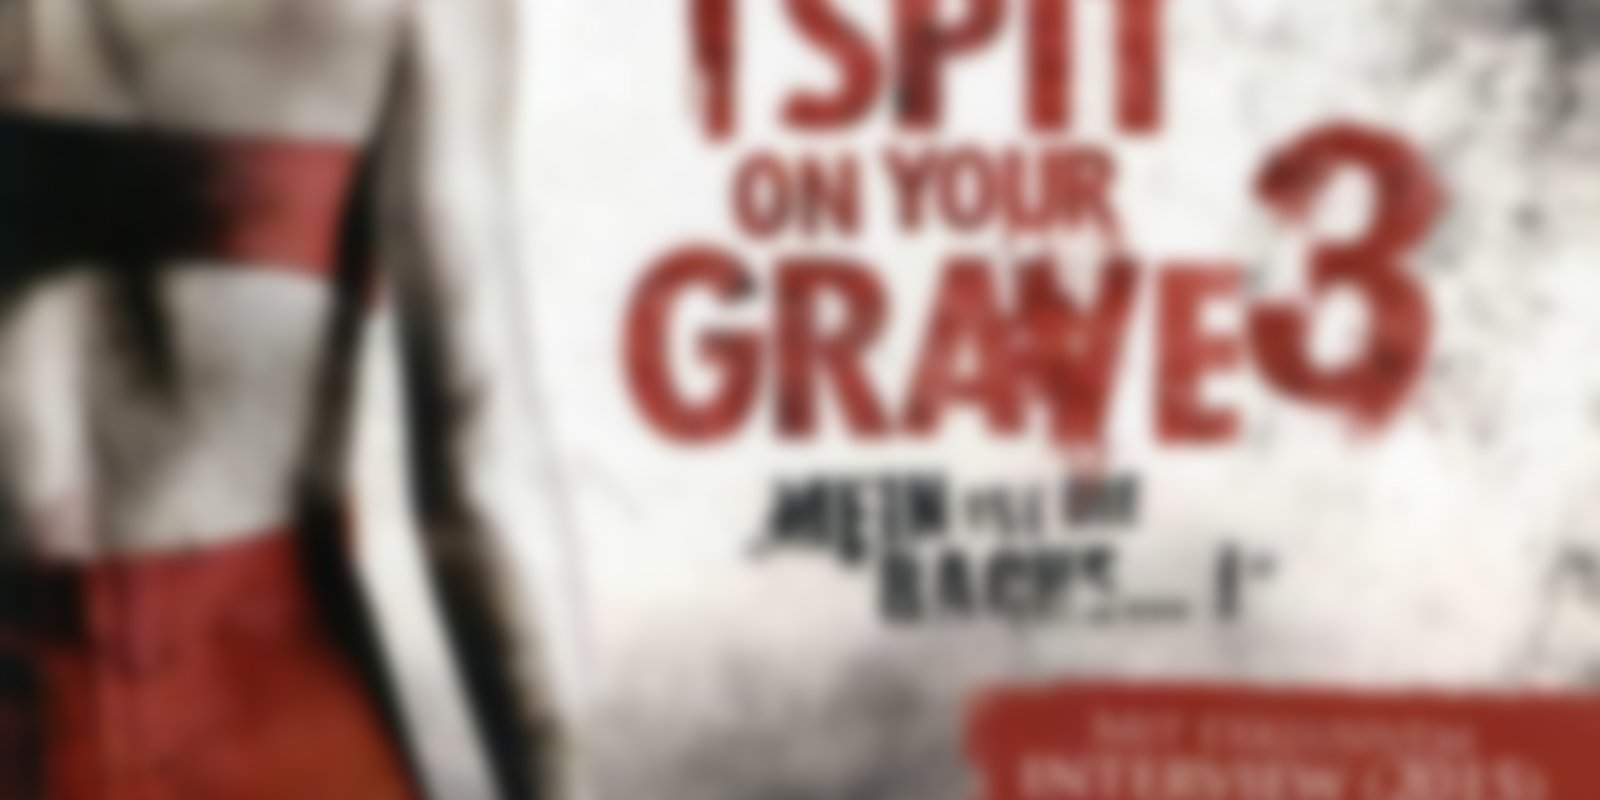 I Spit on Your Grave 3